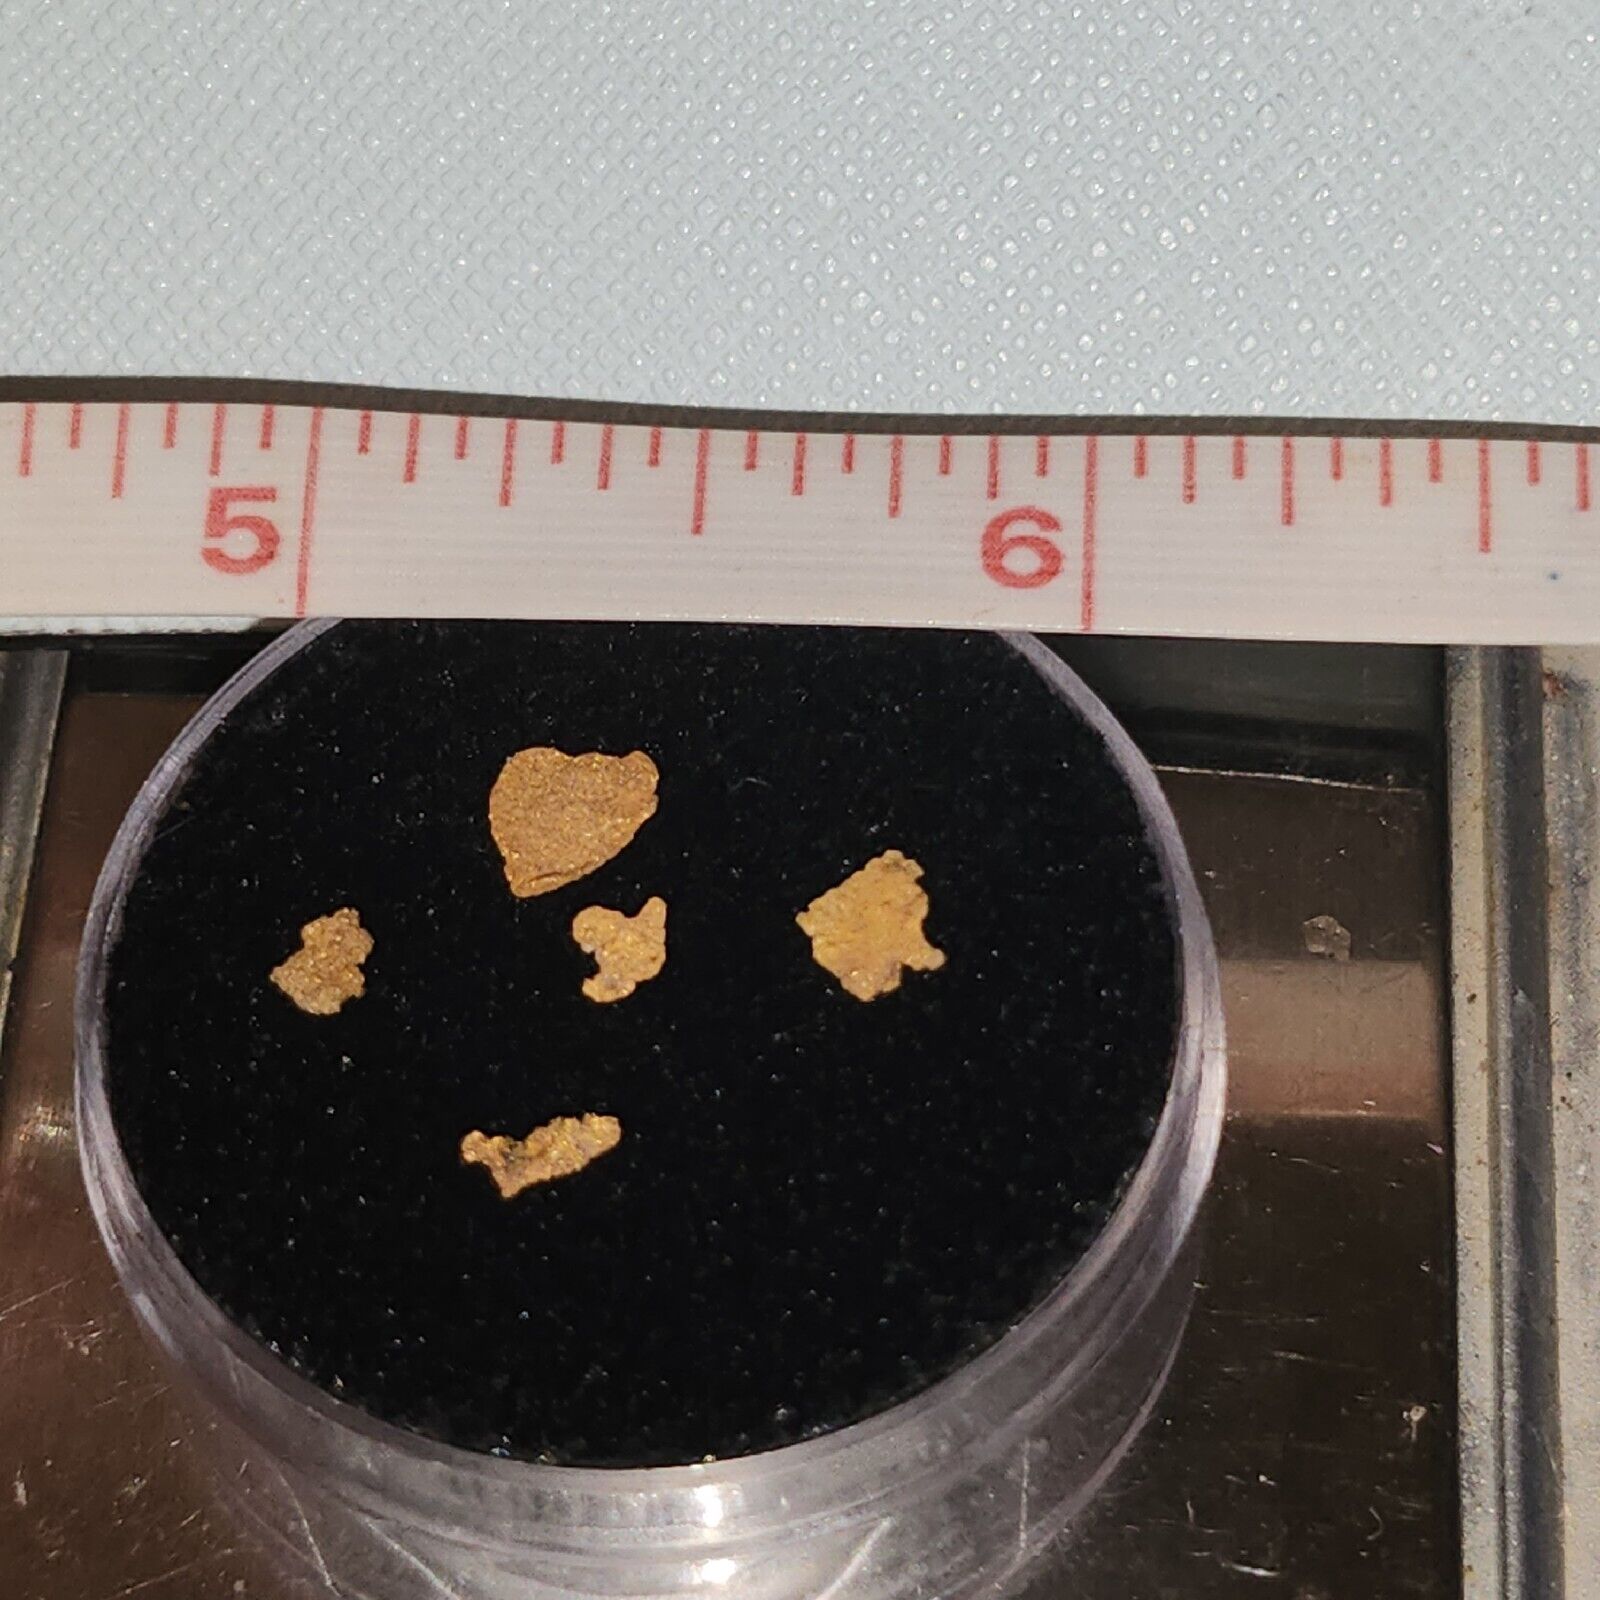 MASSIF FRANCE Rare Native Natural 5pcs Gold nugget Specimen Collector Lot Без бренда - фотография #11